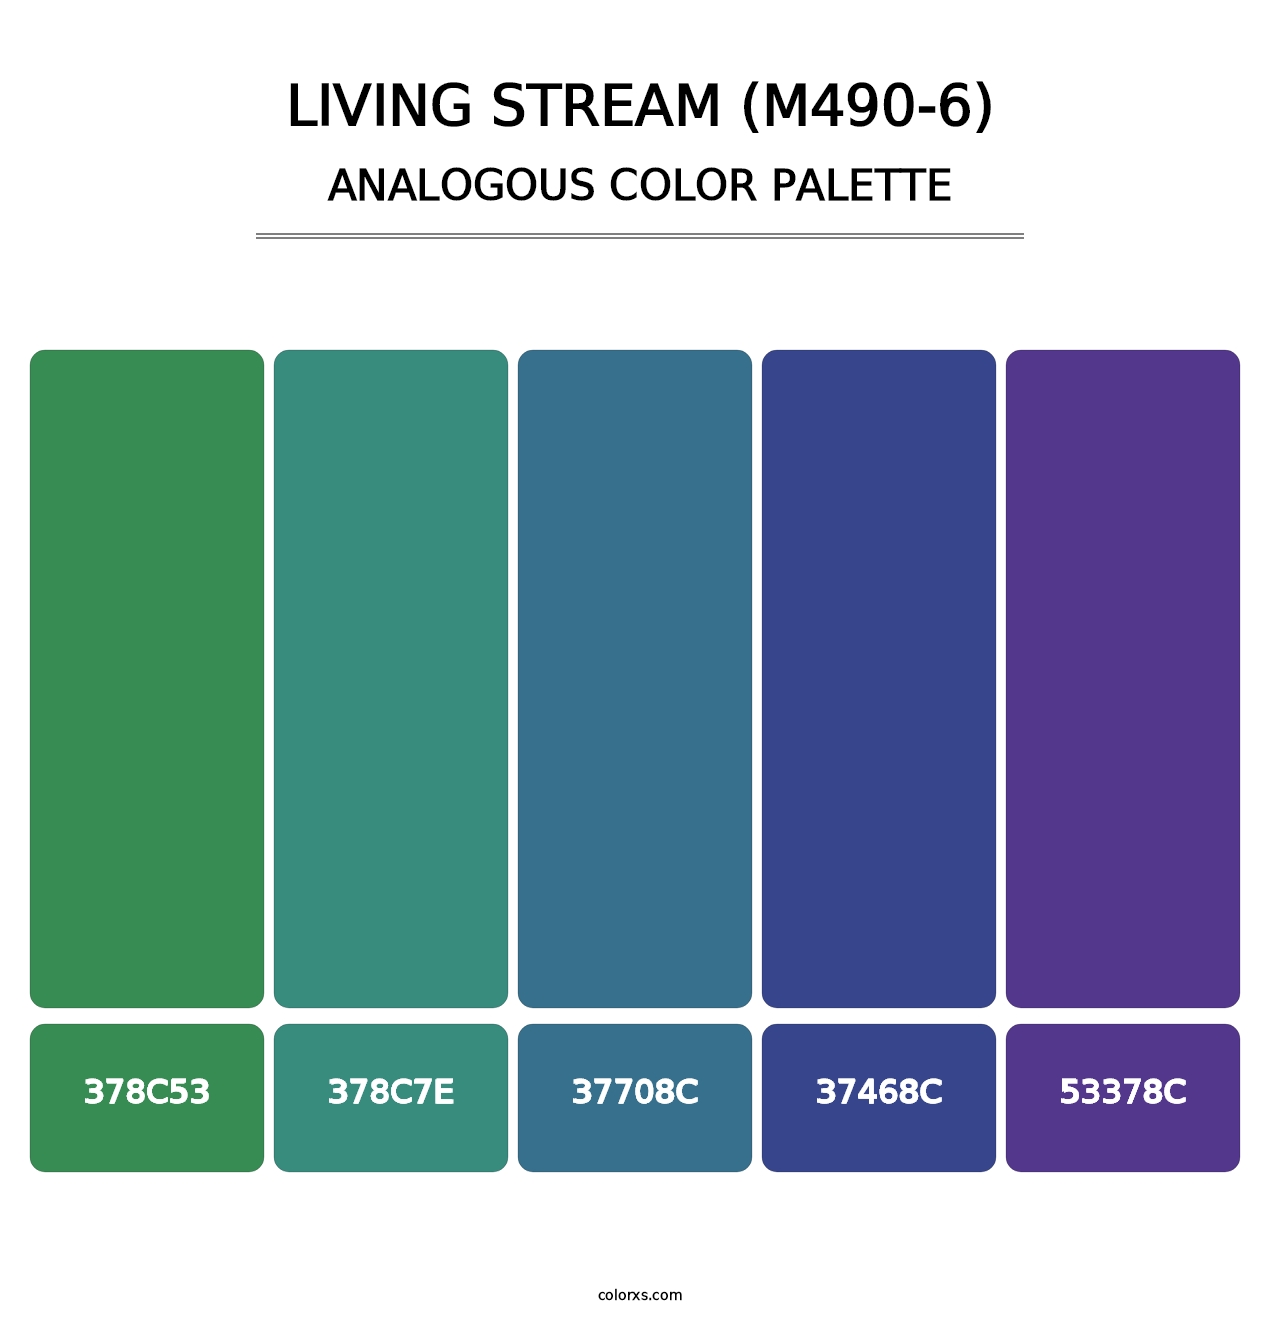 Living Stream (M490-6) - Analogous Color Palette